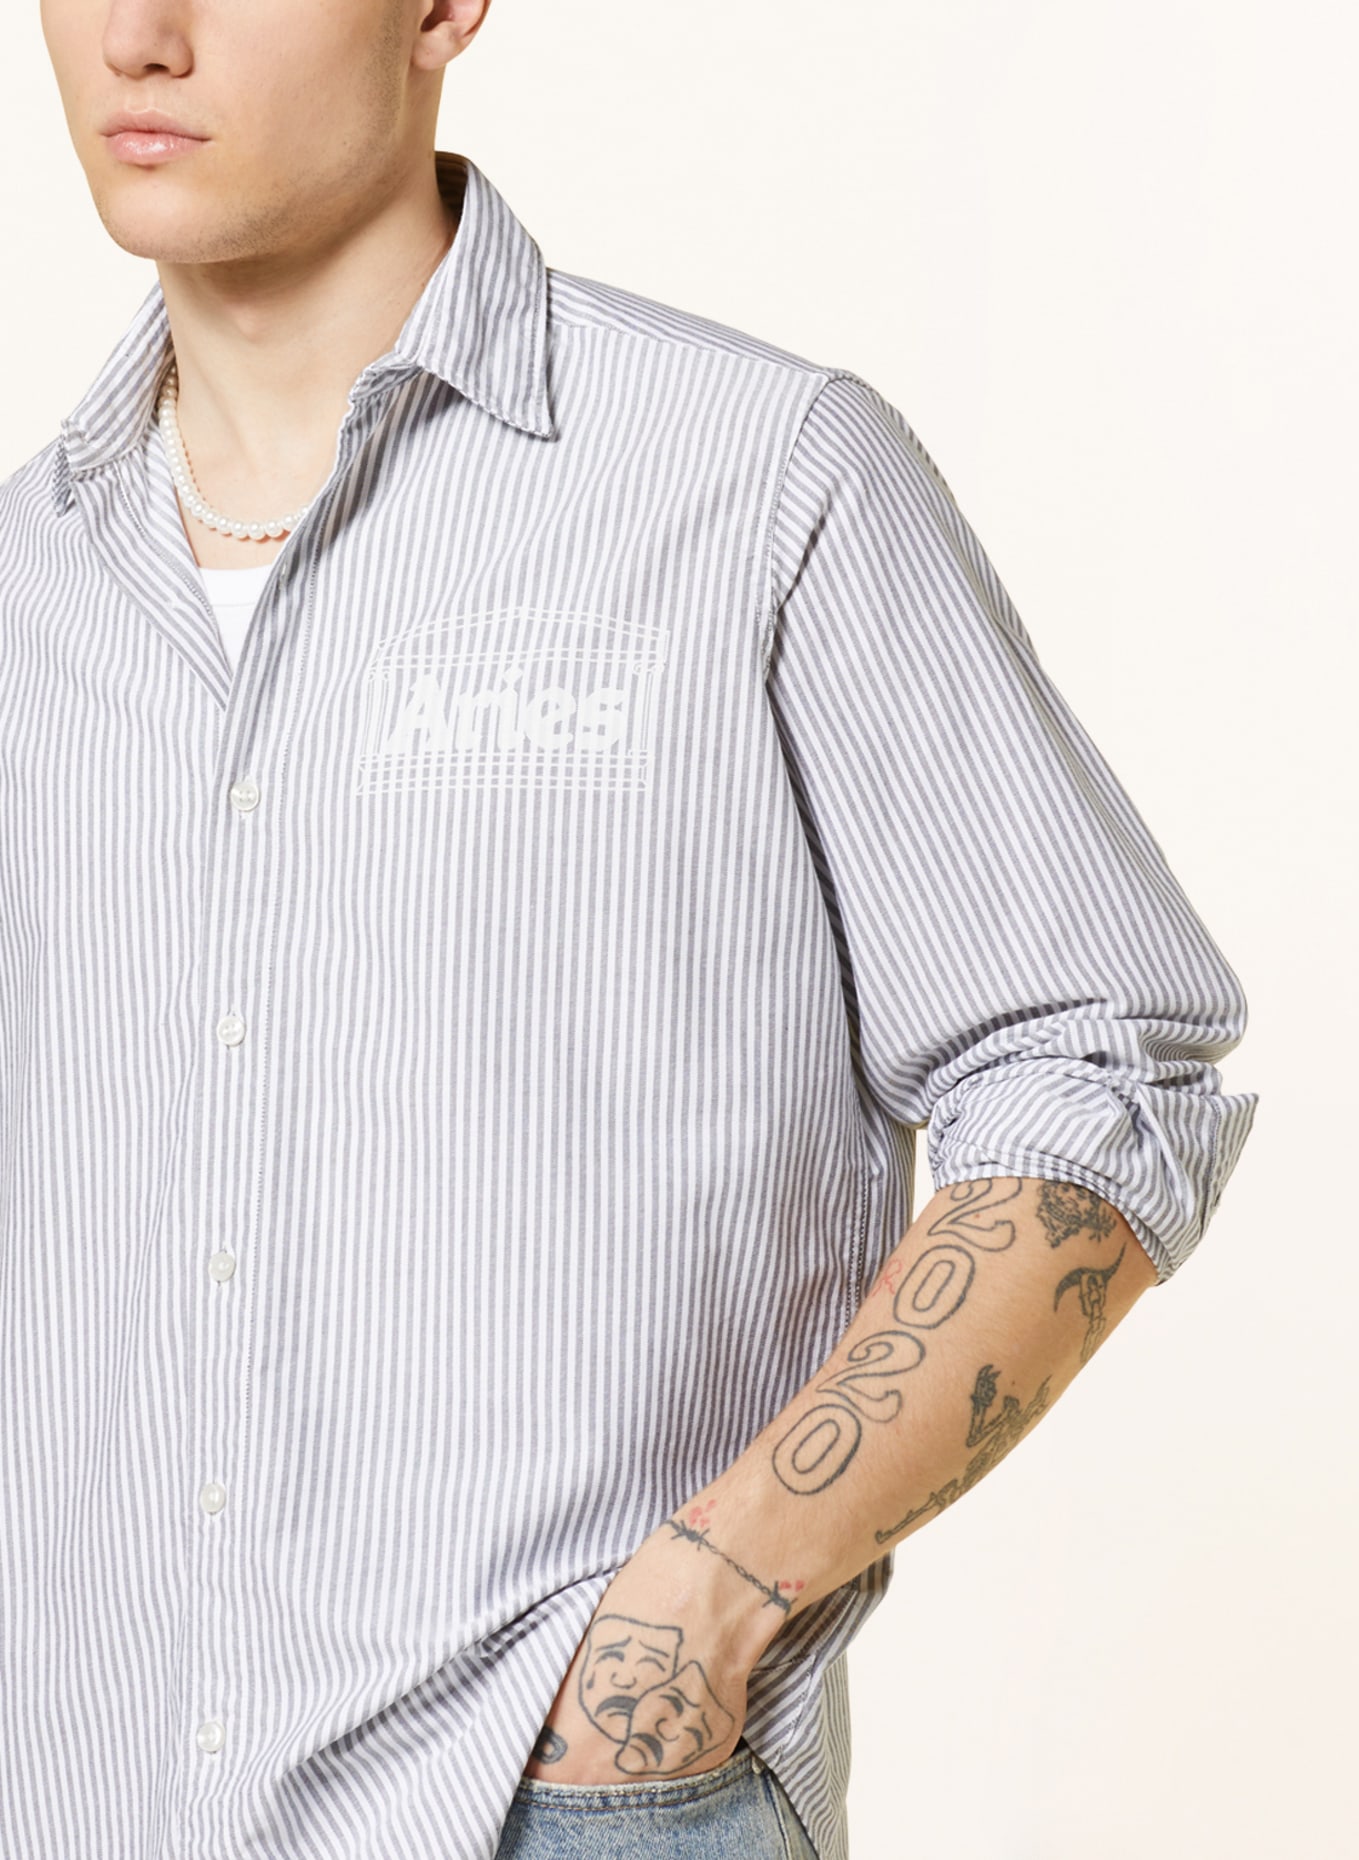 Aries Arise Shirt comfort fit in white/ light gray